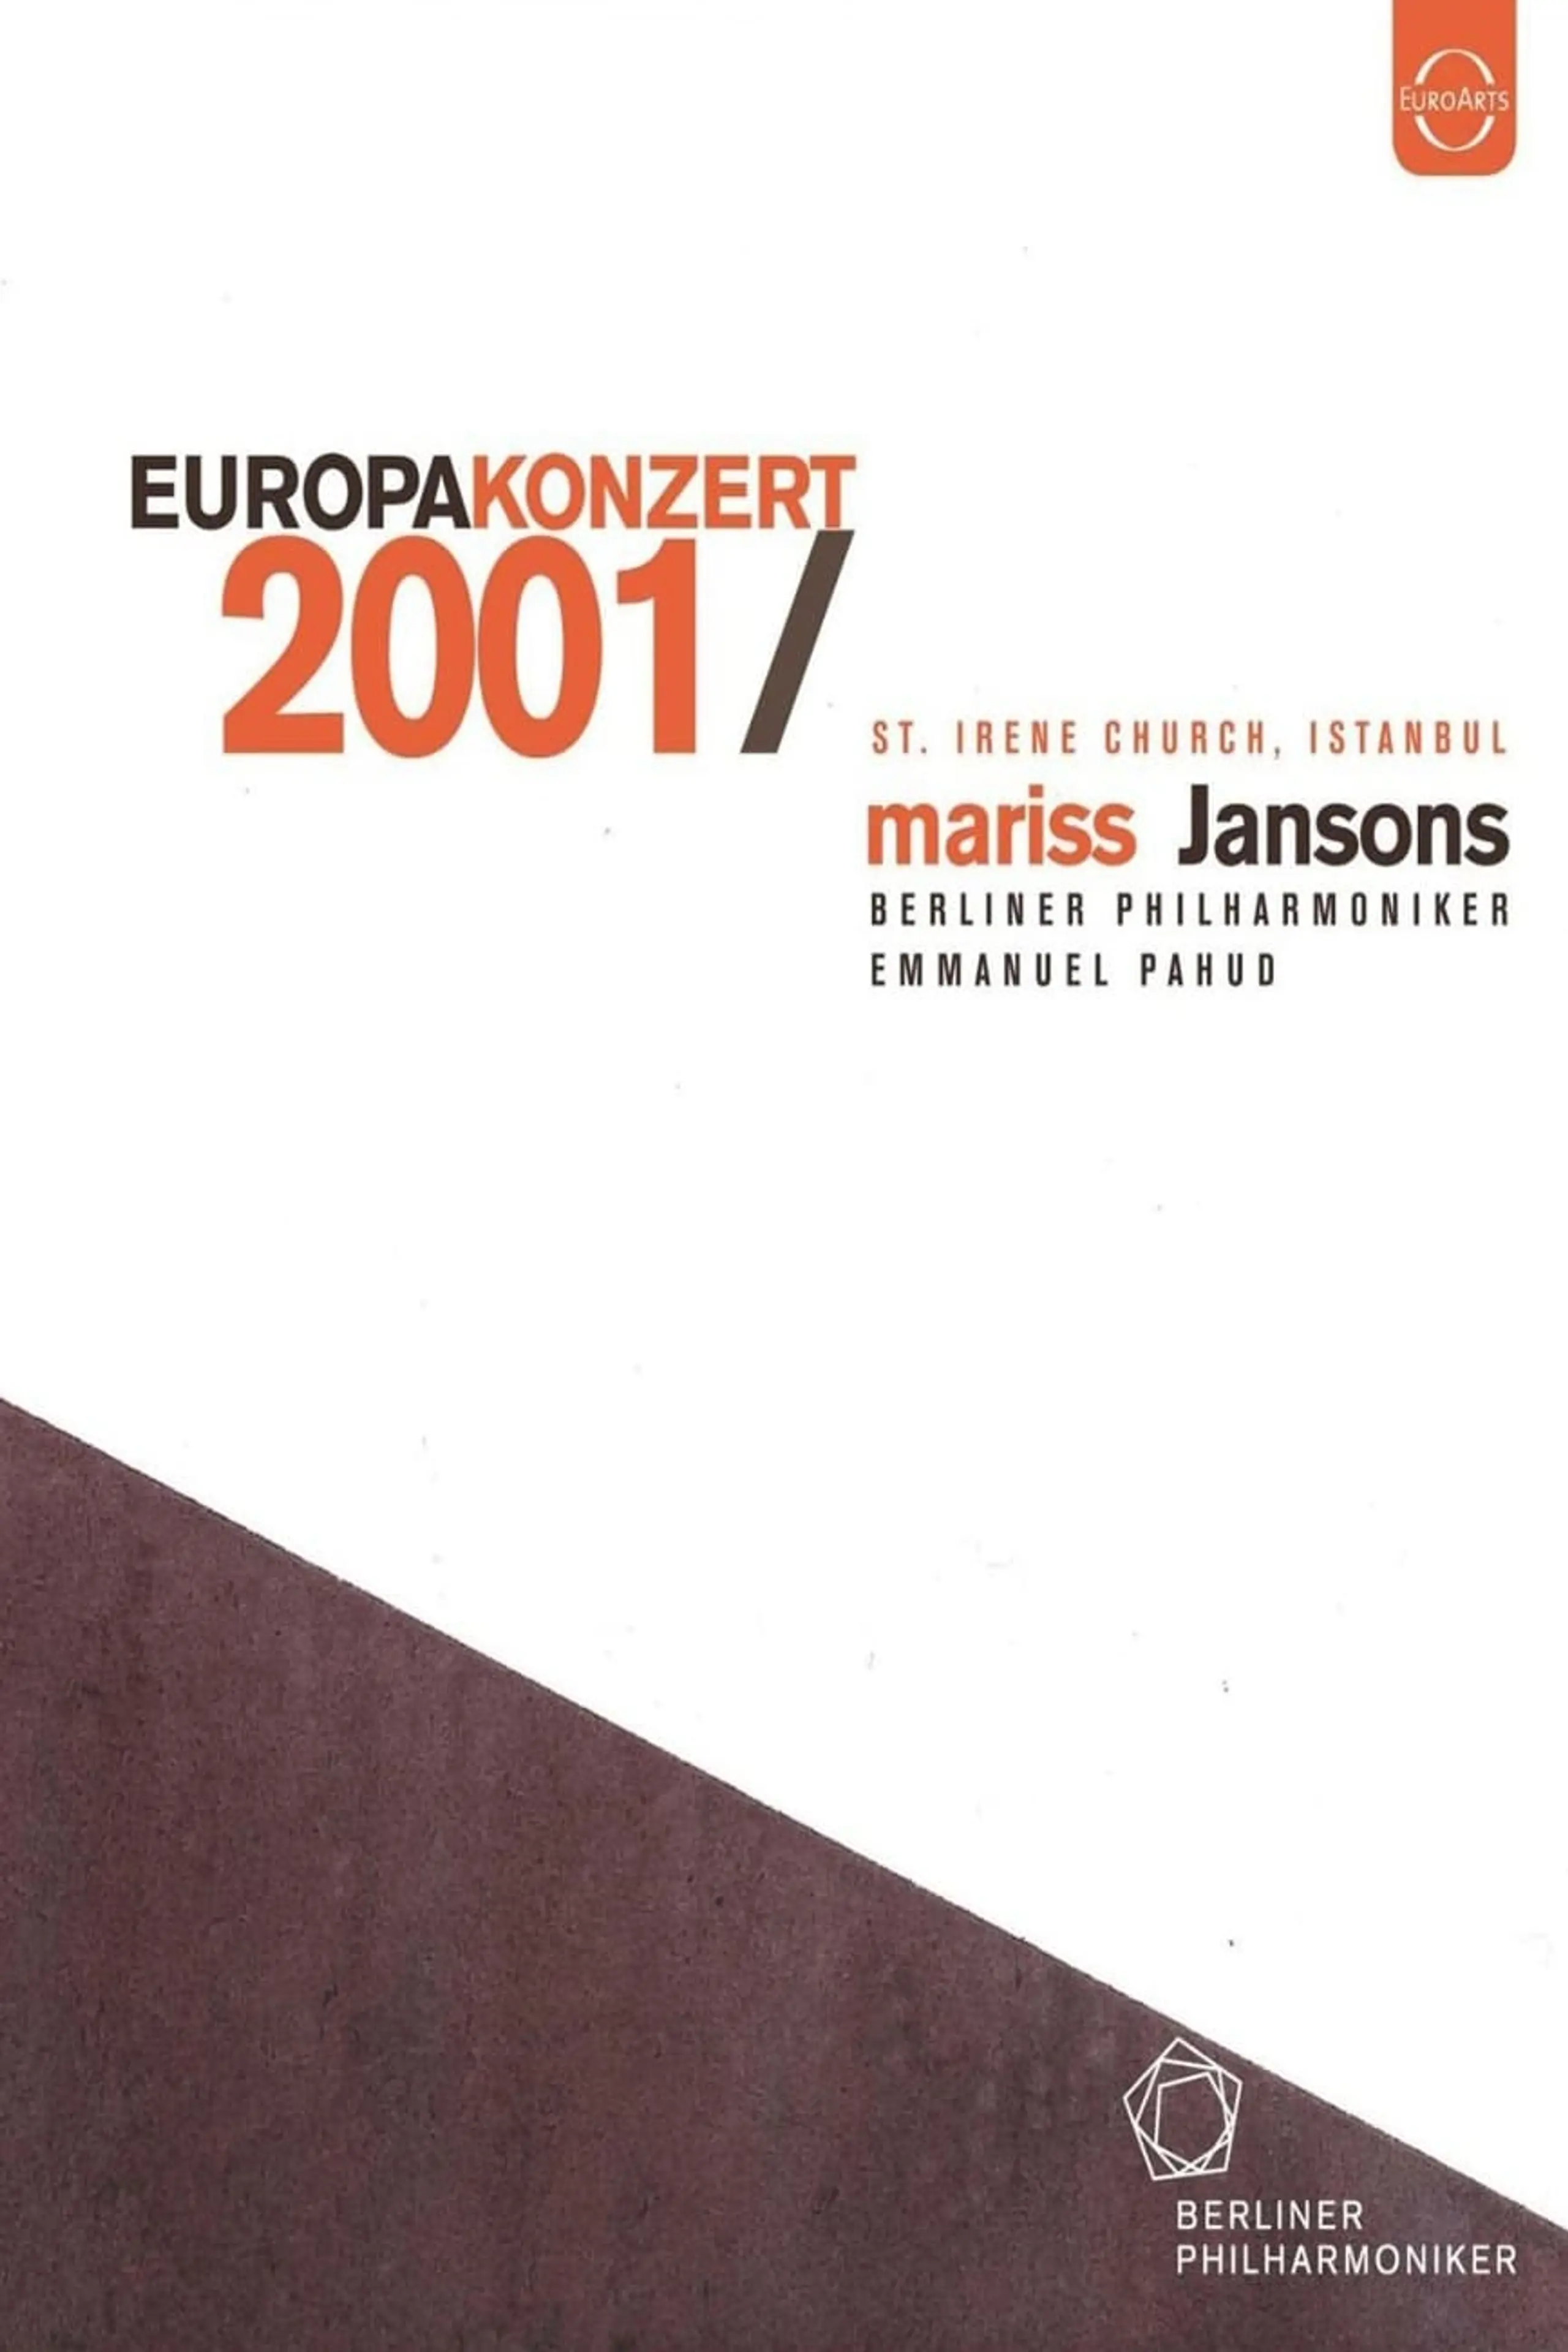 Europakonzert 2001 from Istanbul